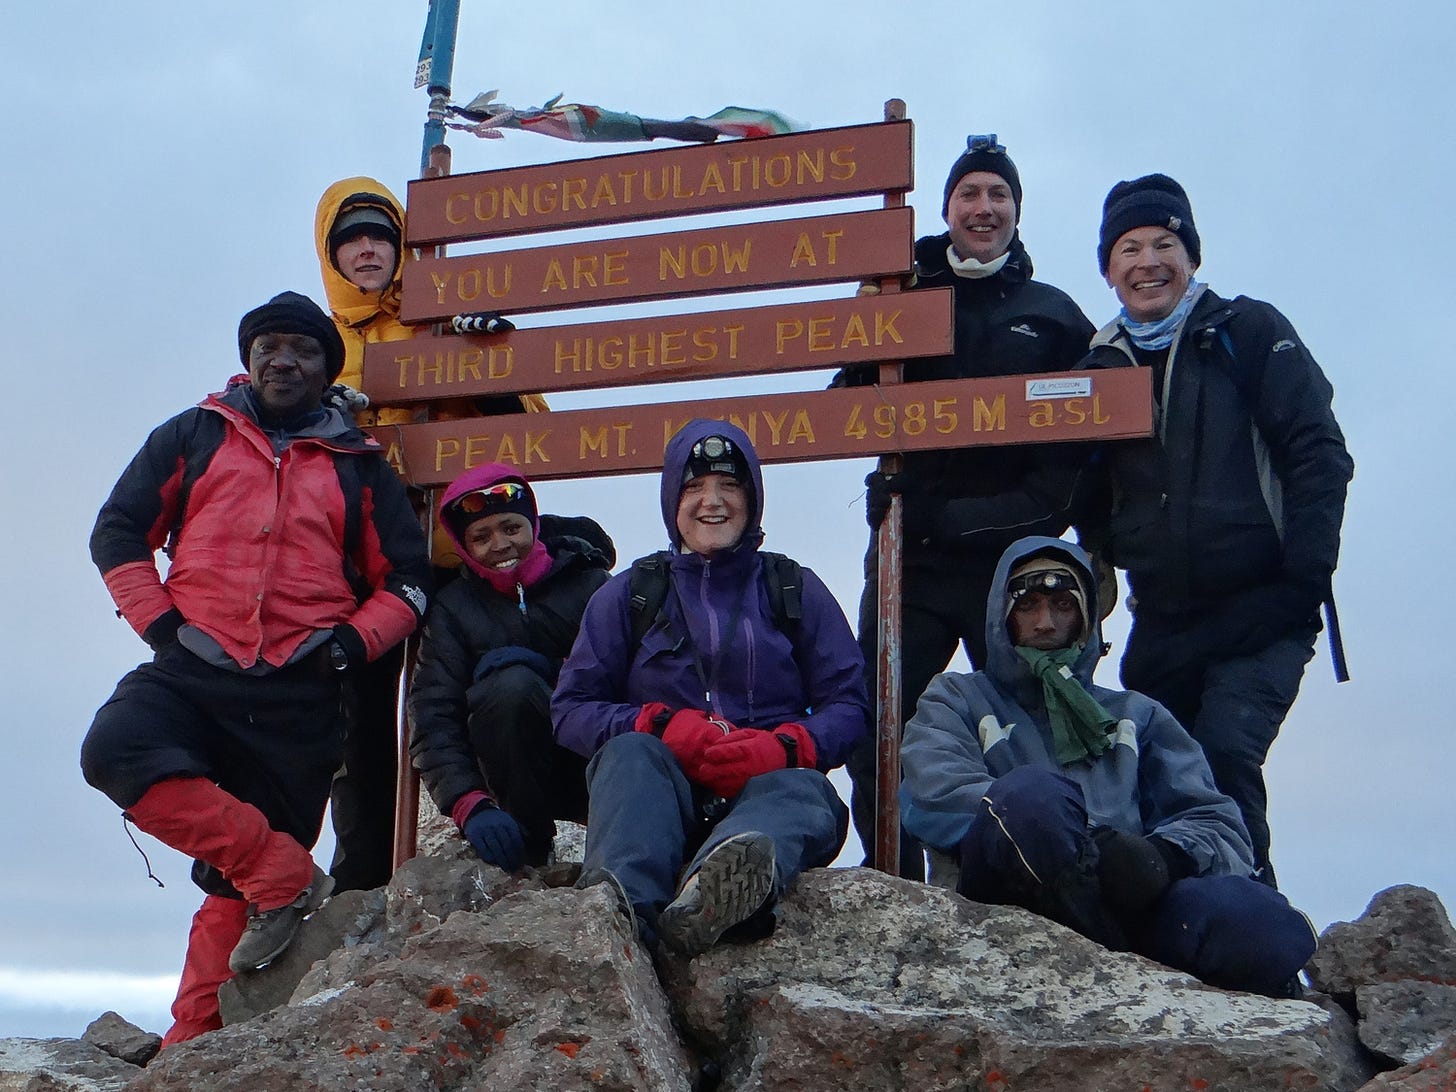 We reach the summit of Mount Kenya